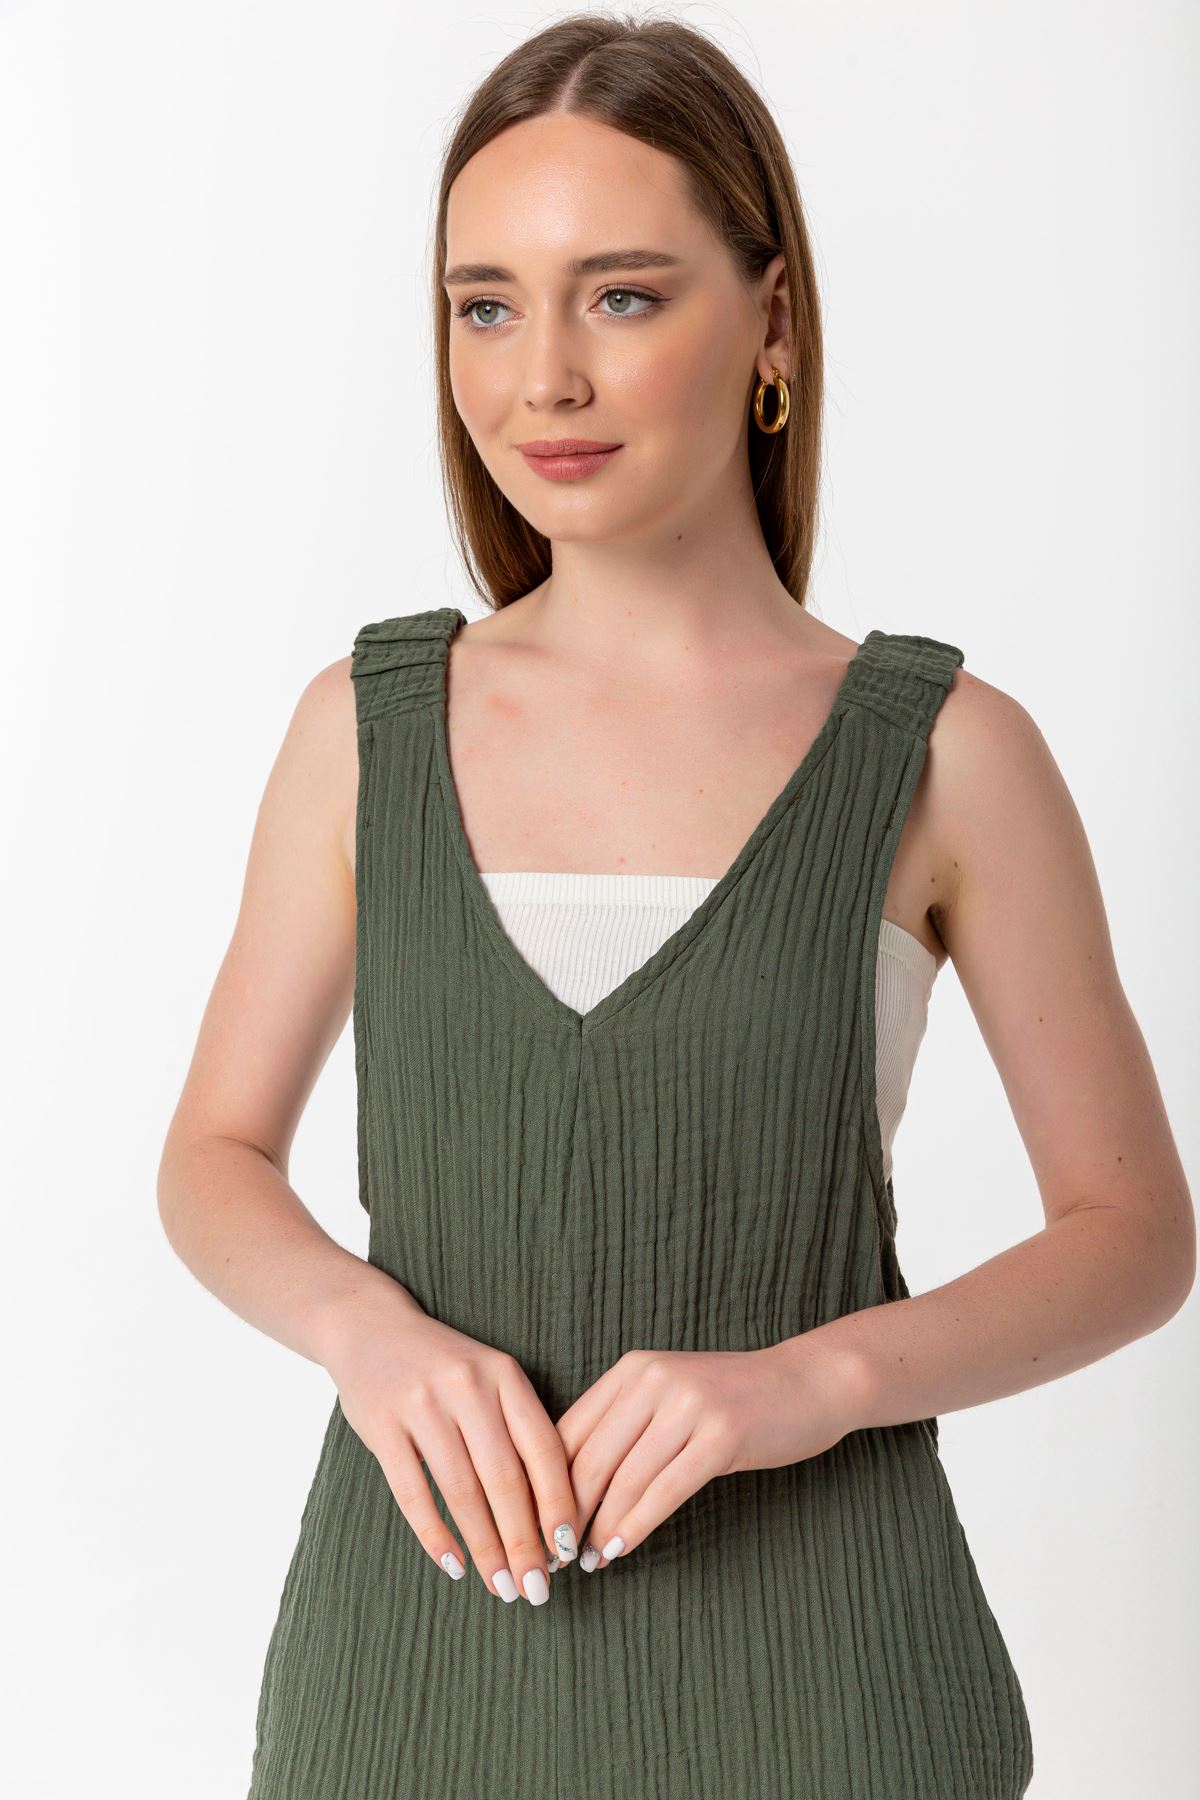 Licra Fabric V-Neck Maxi Wide Pattern Back Pocket Women Overalls - Khaki 